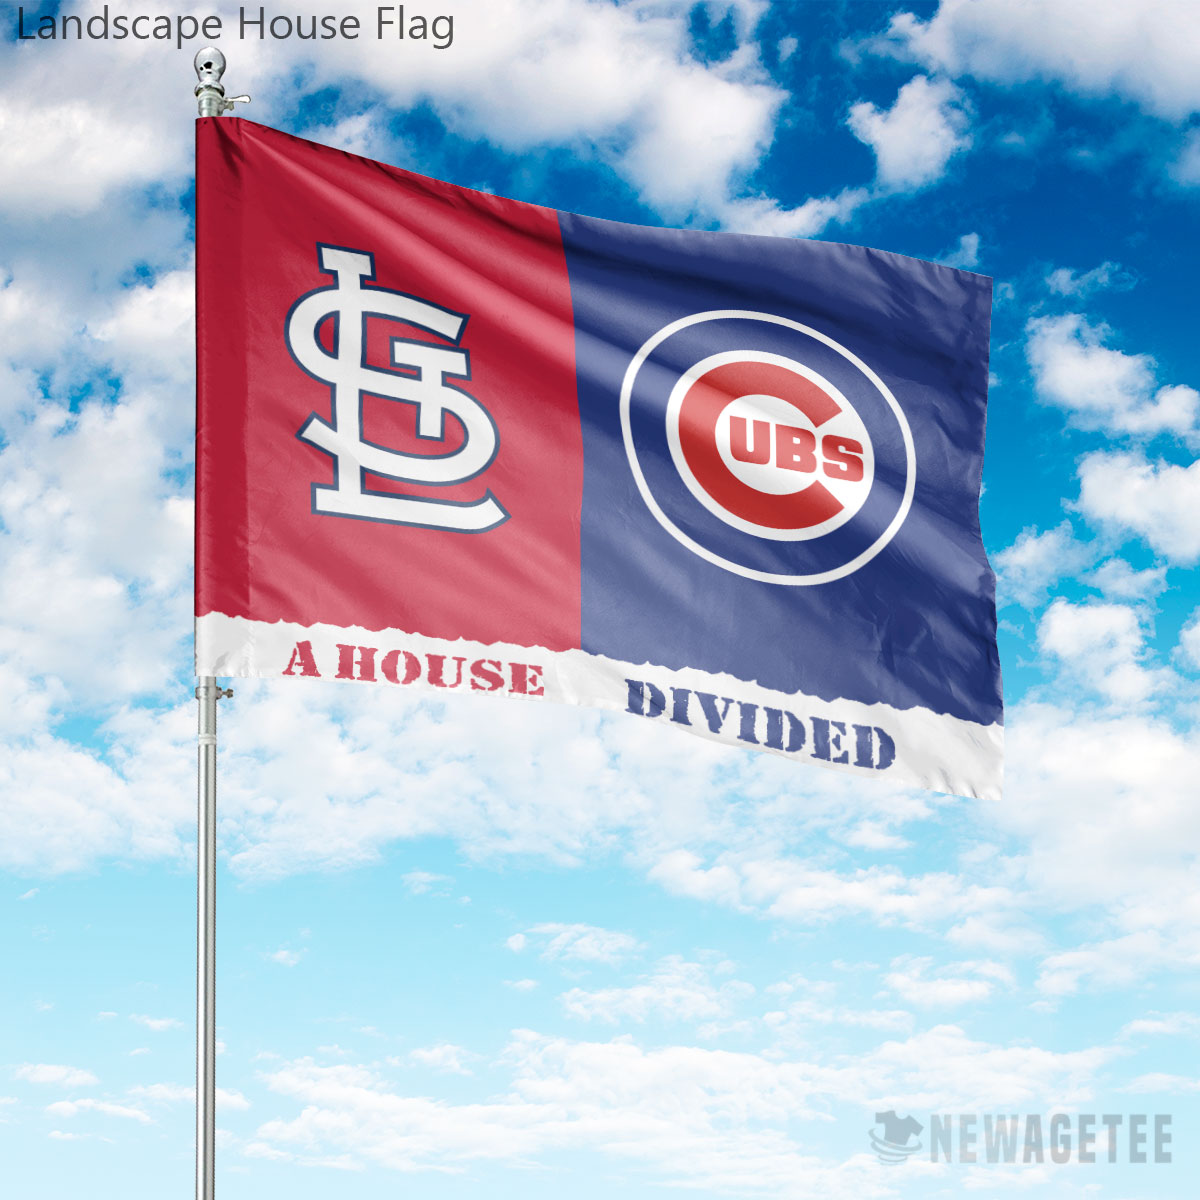 Cubs Cardinals House Divided 